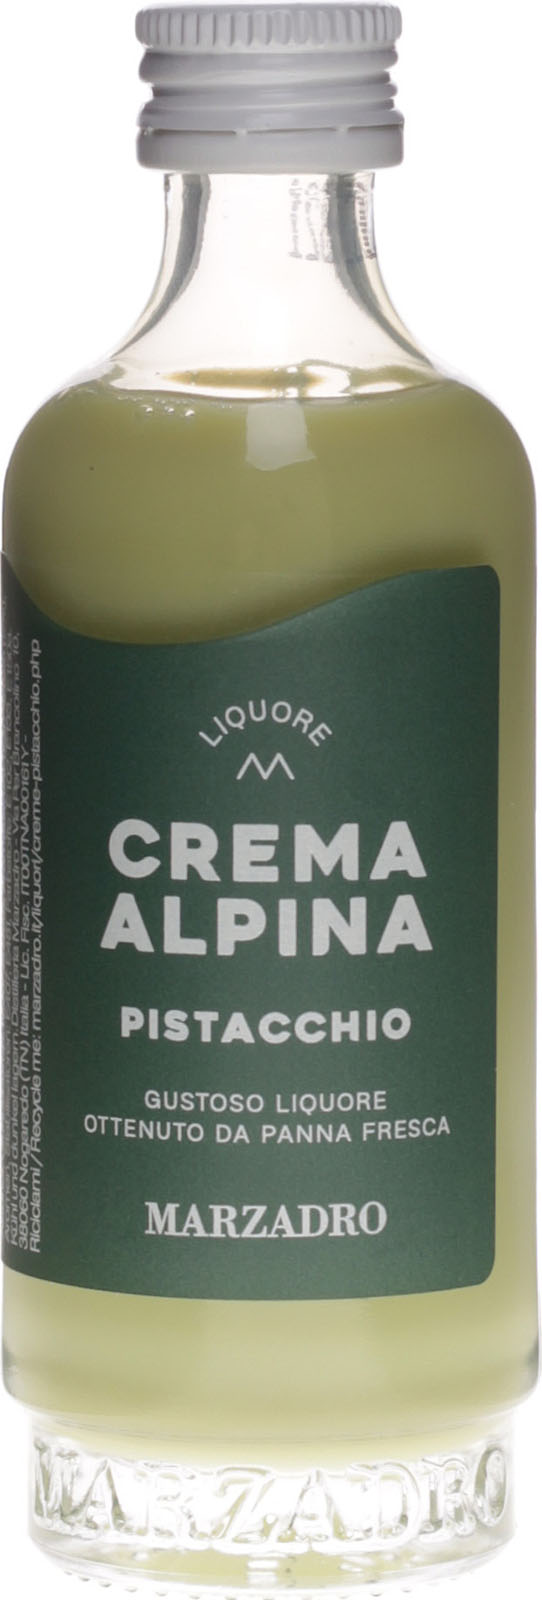 uns Crema 0,05 Pistacchio Alpina Marzadro bei Liter